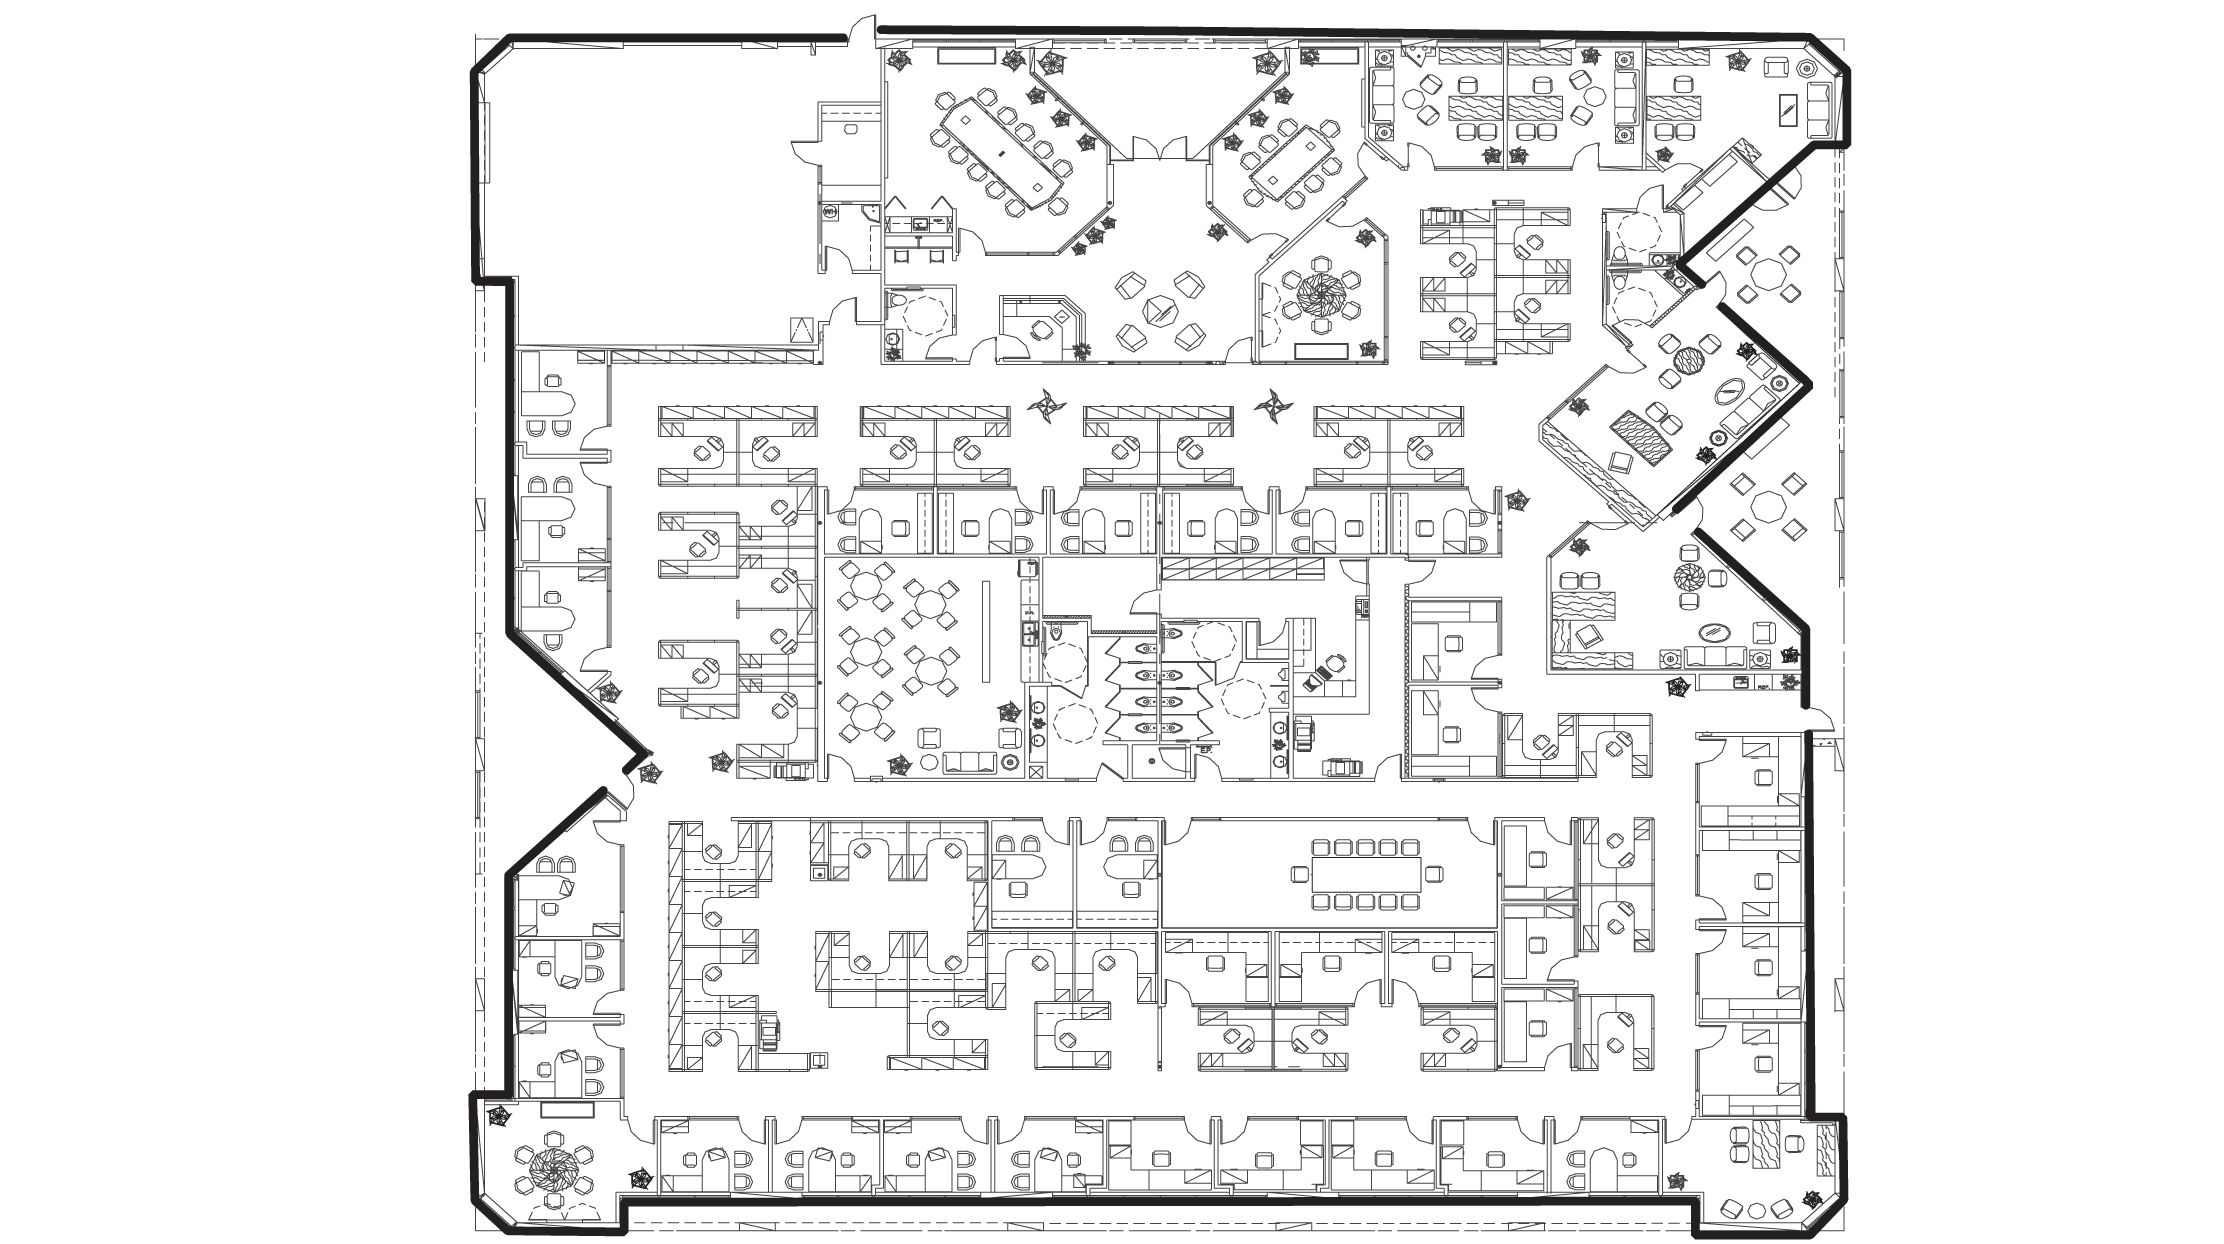 The SunCal Companies Headquarters Floor Plan